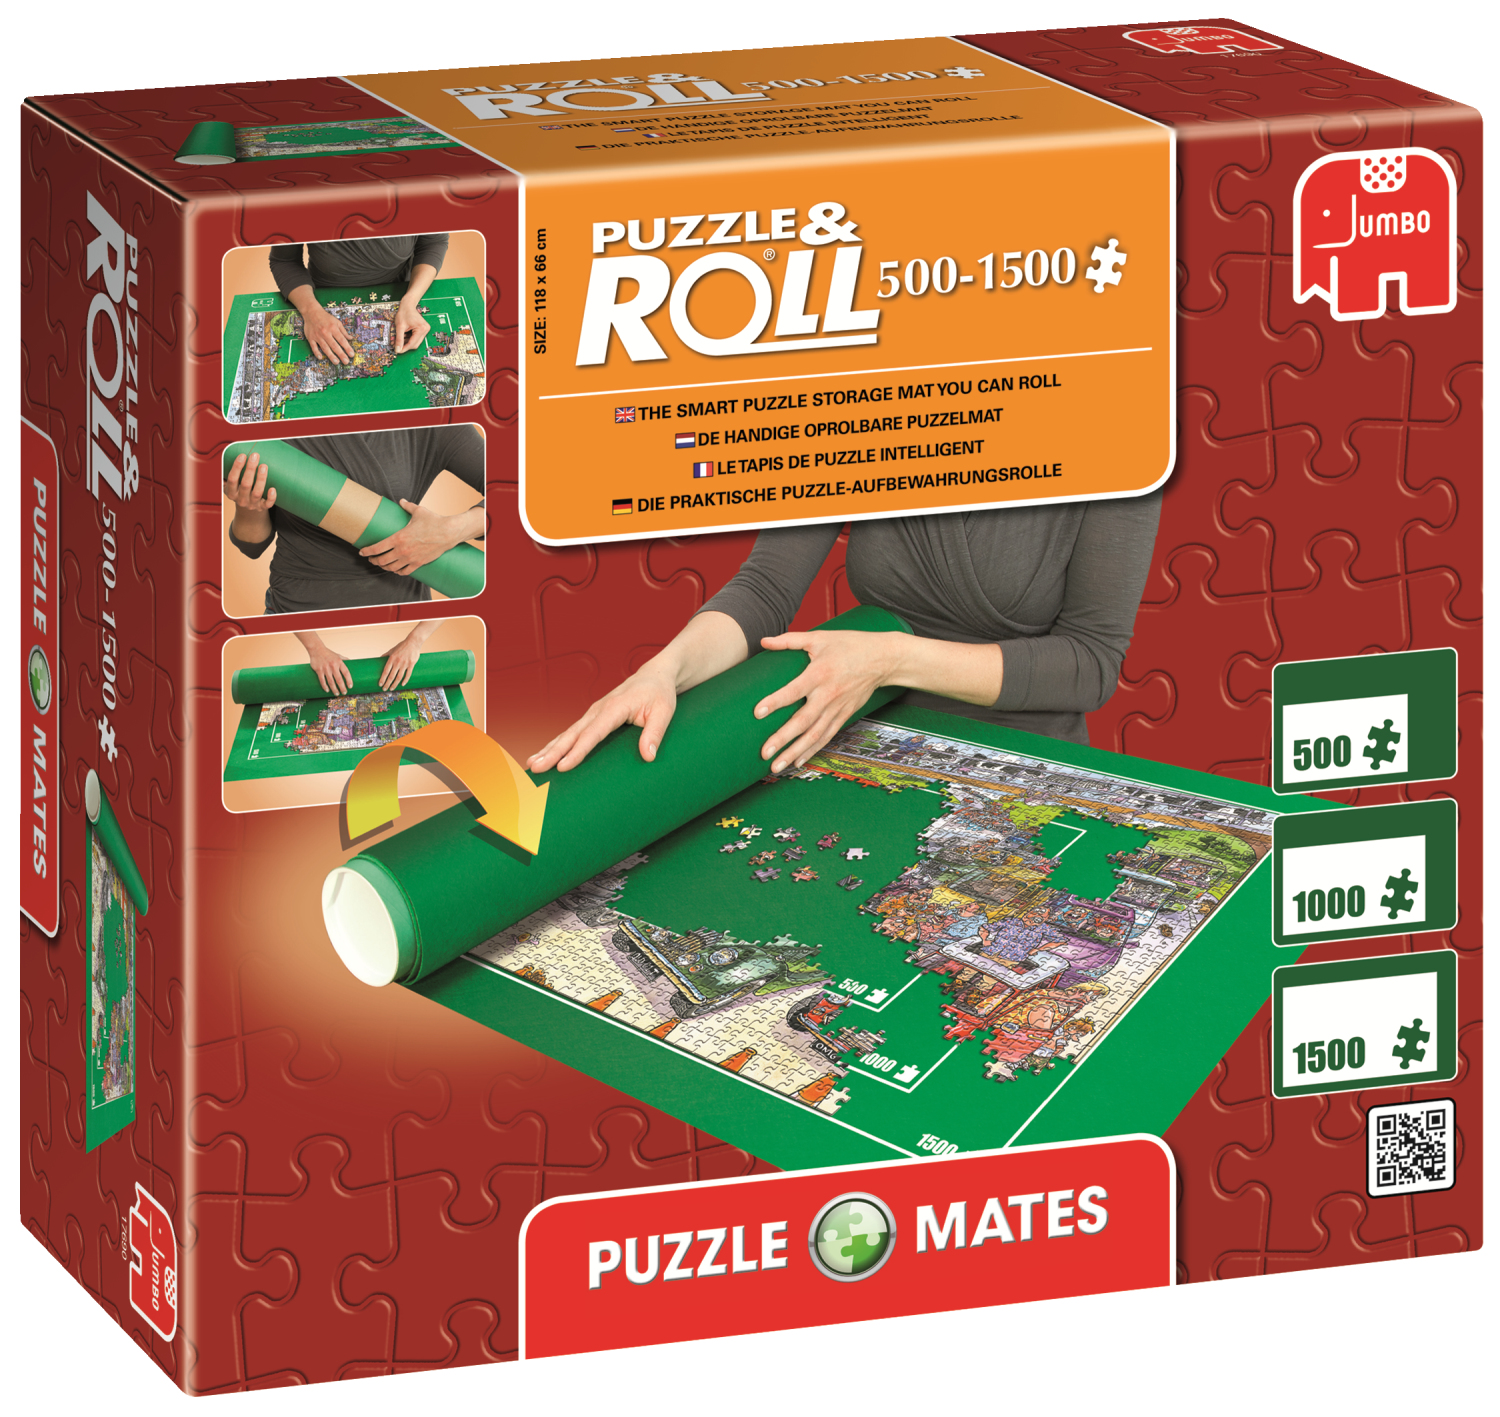 Roll puzzles) Puzzlezubehör, Puzzle - & Mehrfarbig to JUMBO piece 1500 Puzzle Mates (up